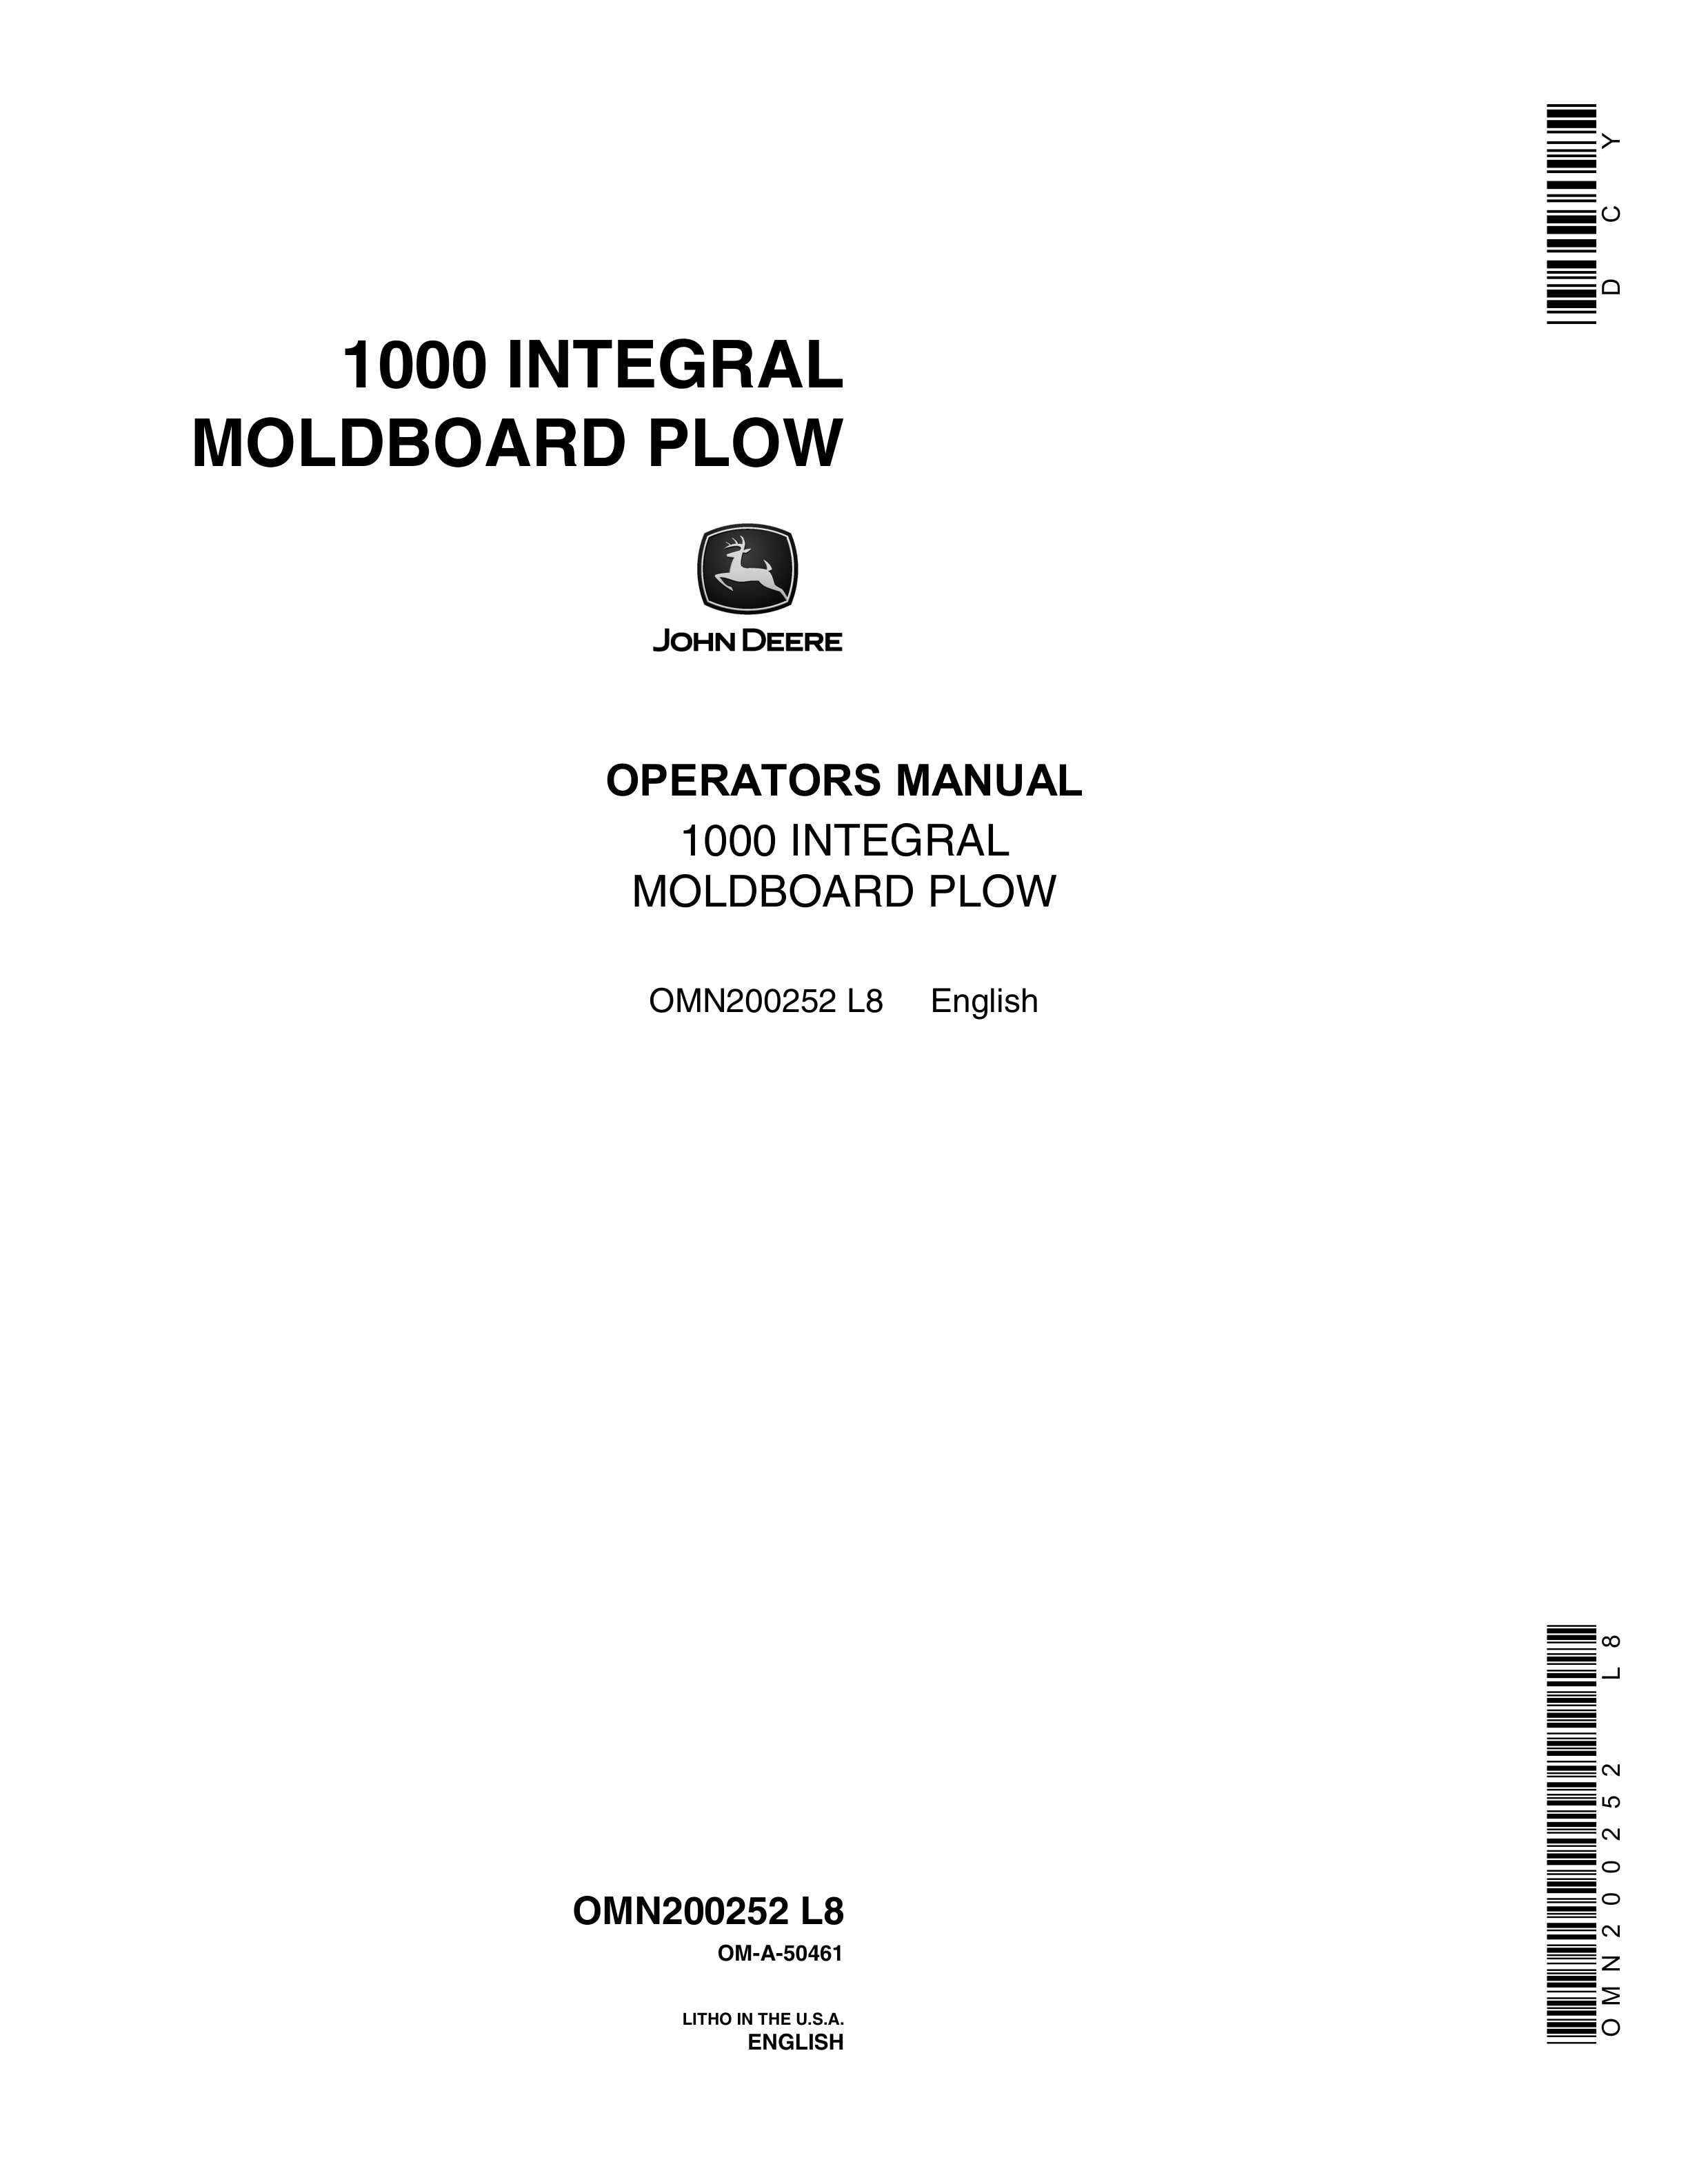 John Deere 1000 INTEGRAL MOLDBOARD PLOW Operator Manual OMN200252 1